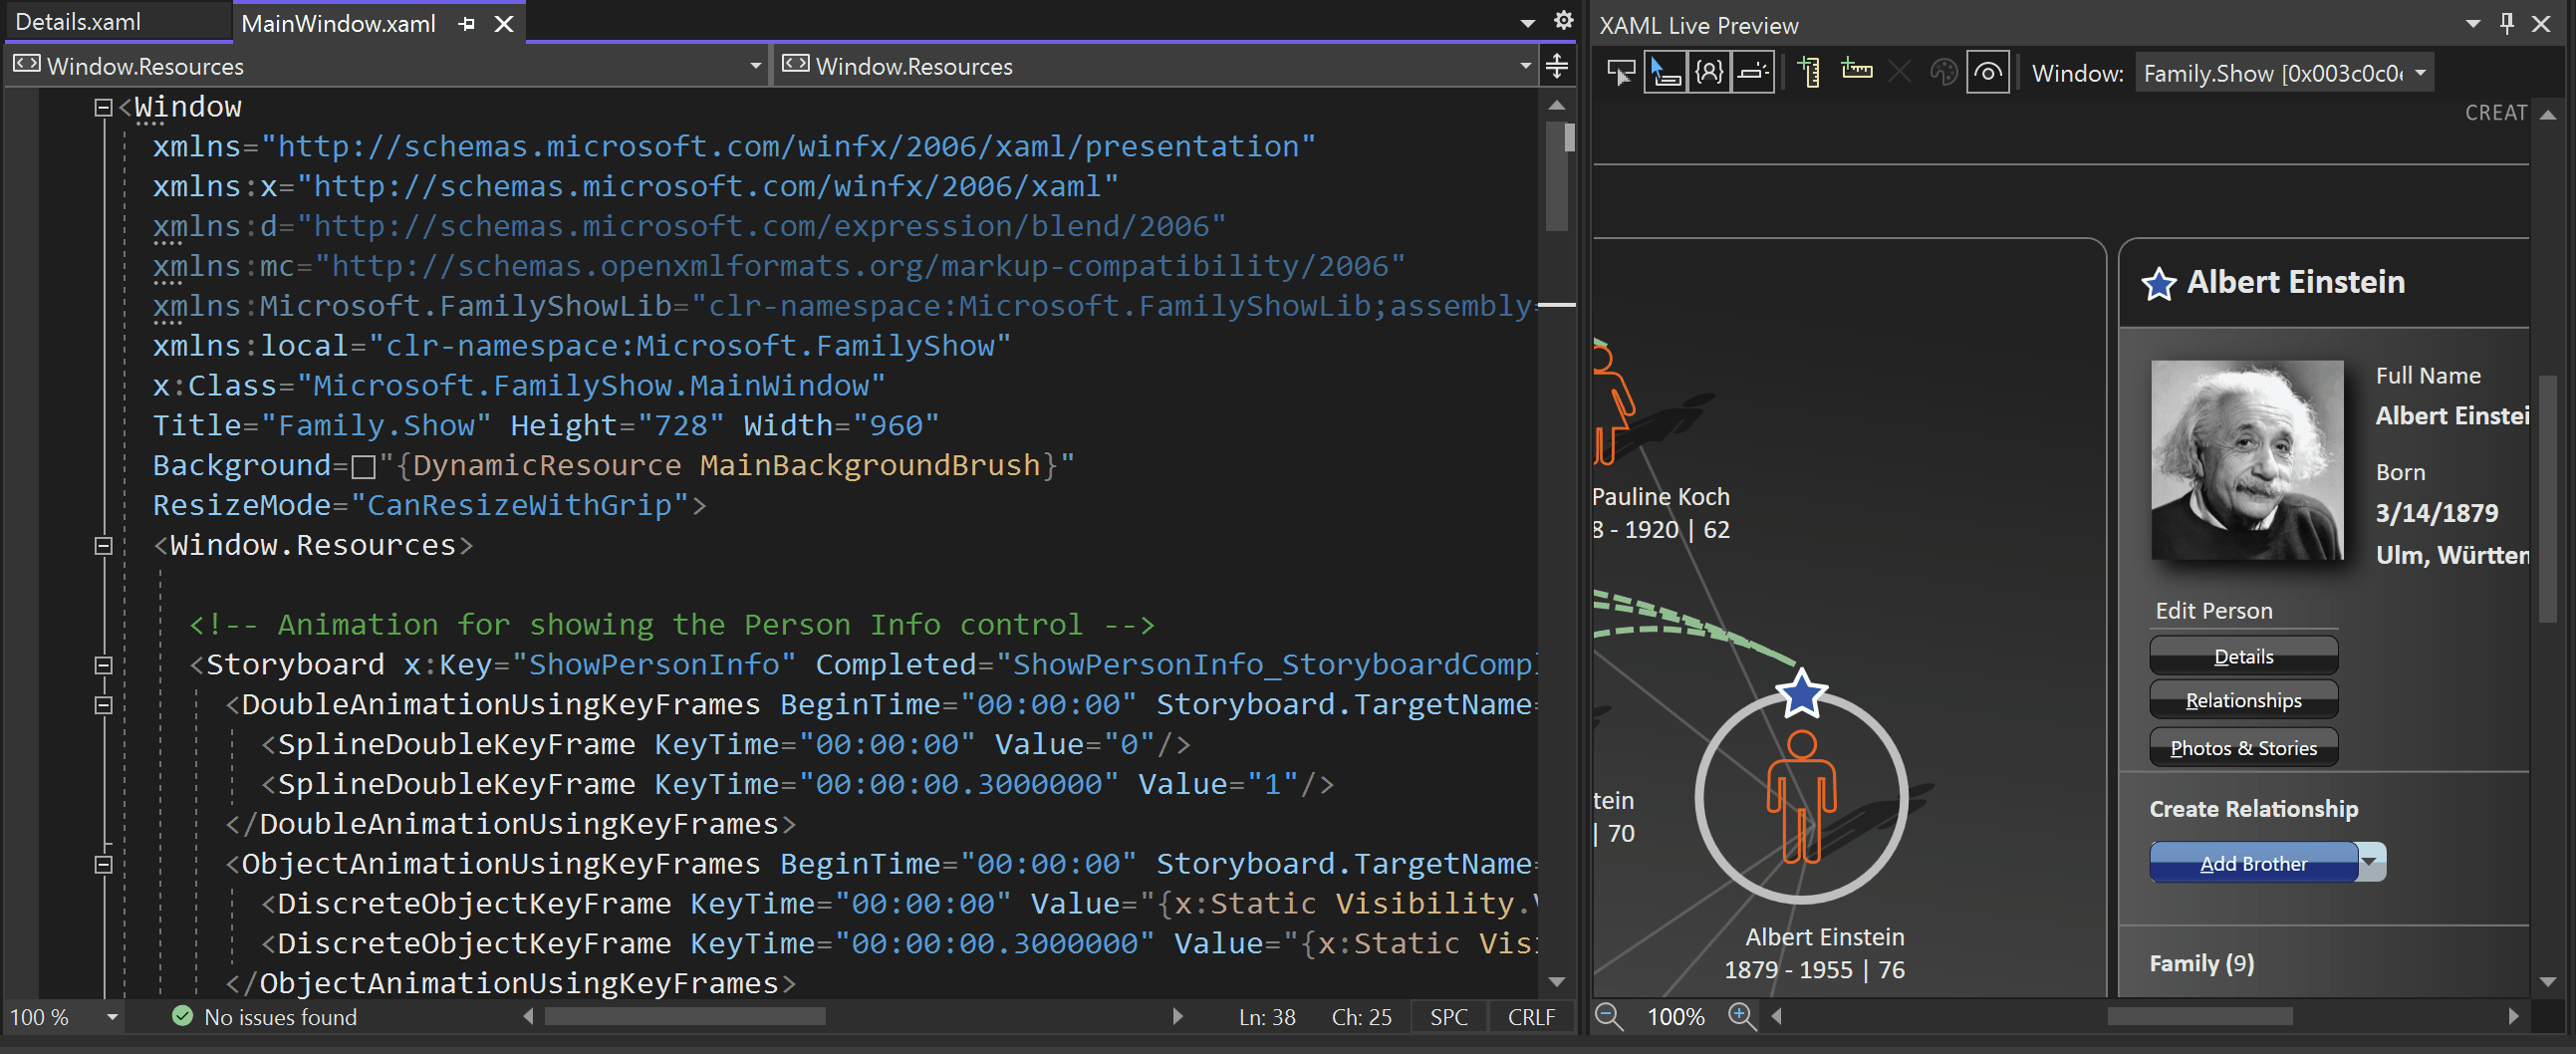 Capture and edit desktop app UI with XAML Live Preview - Visual Studio  (Windows) | Microsoft Learn